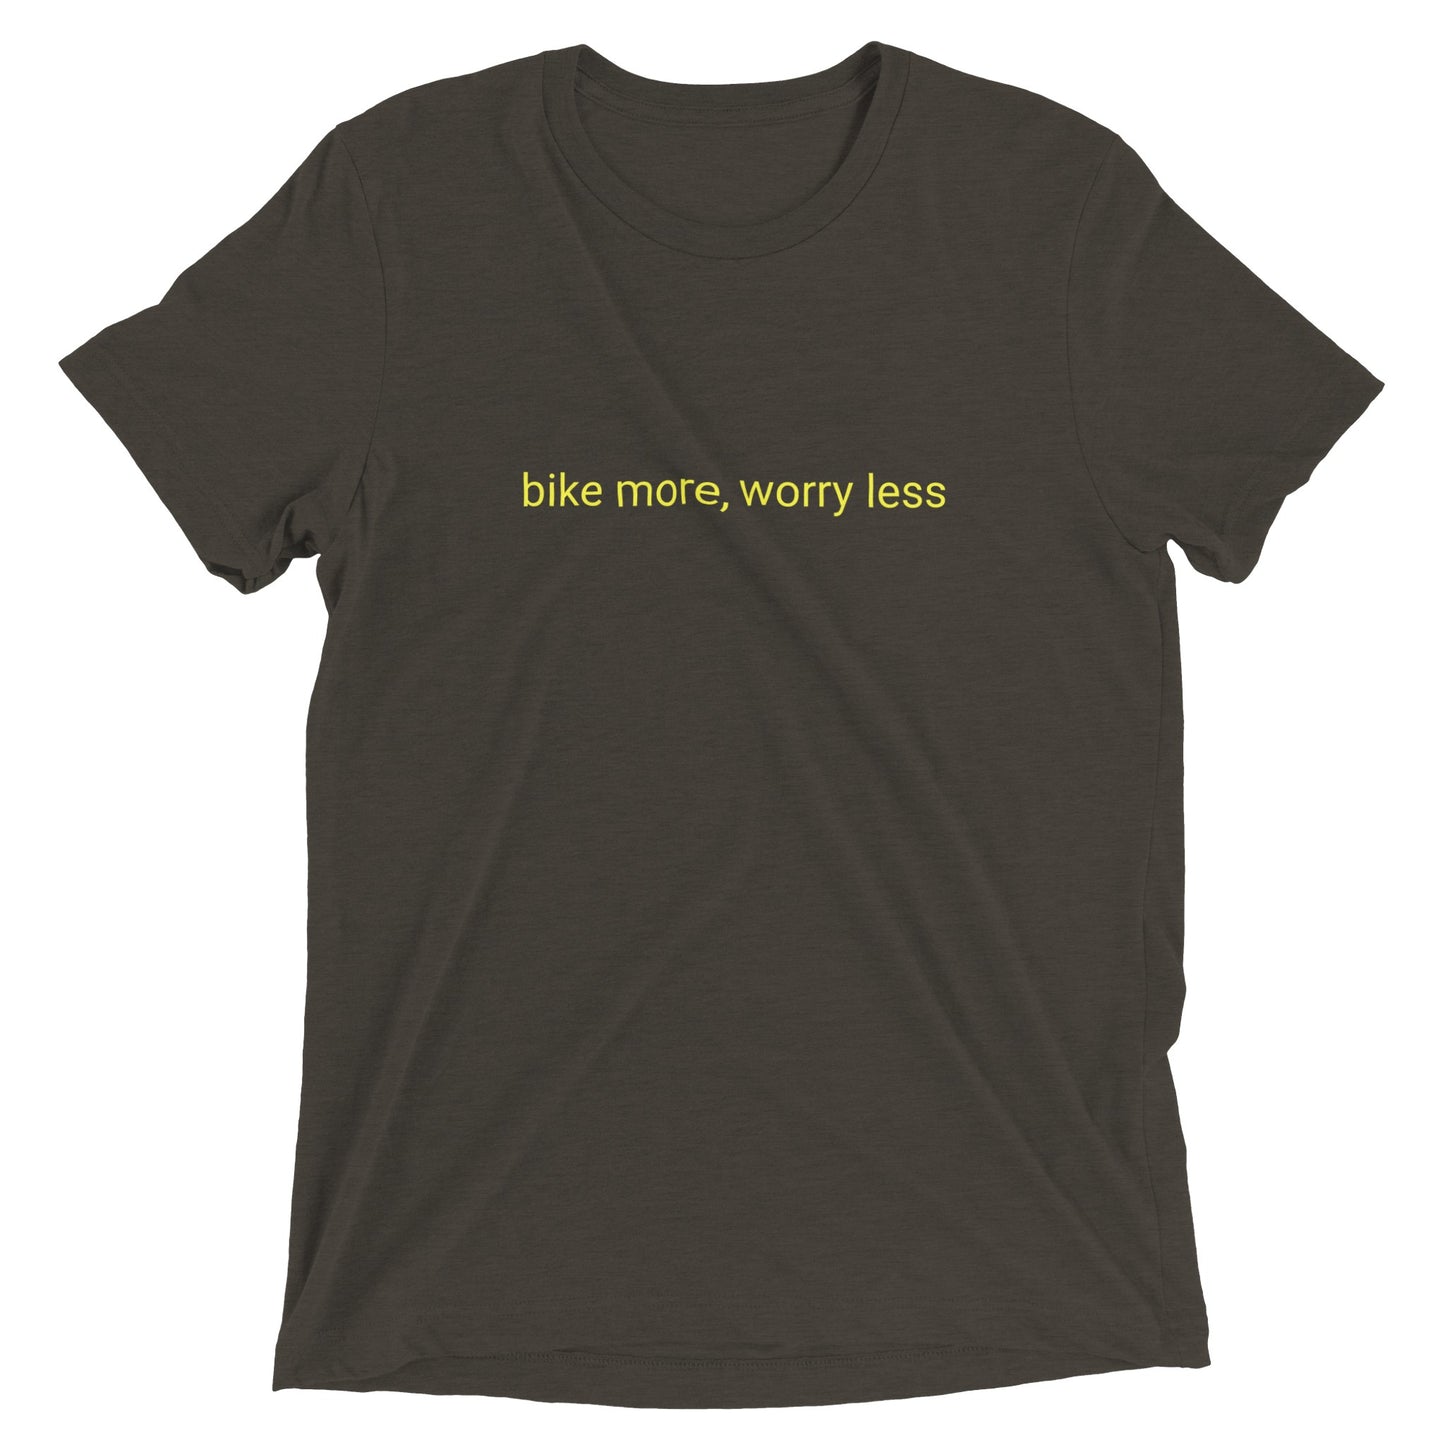 Bike more, worry less: camiseta Triblend unisex con cuello redondo